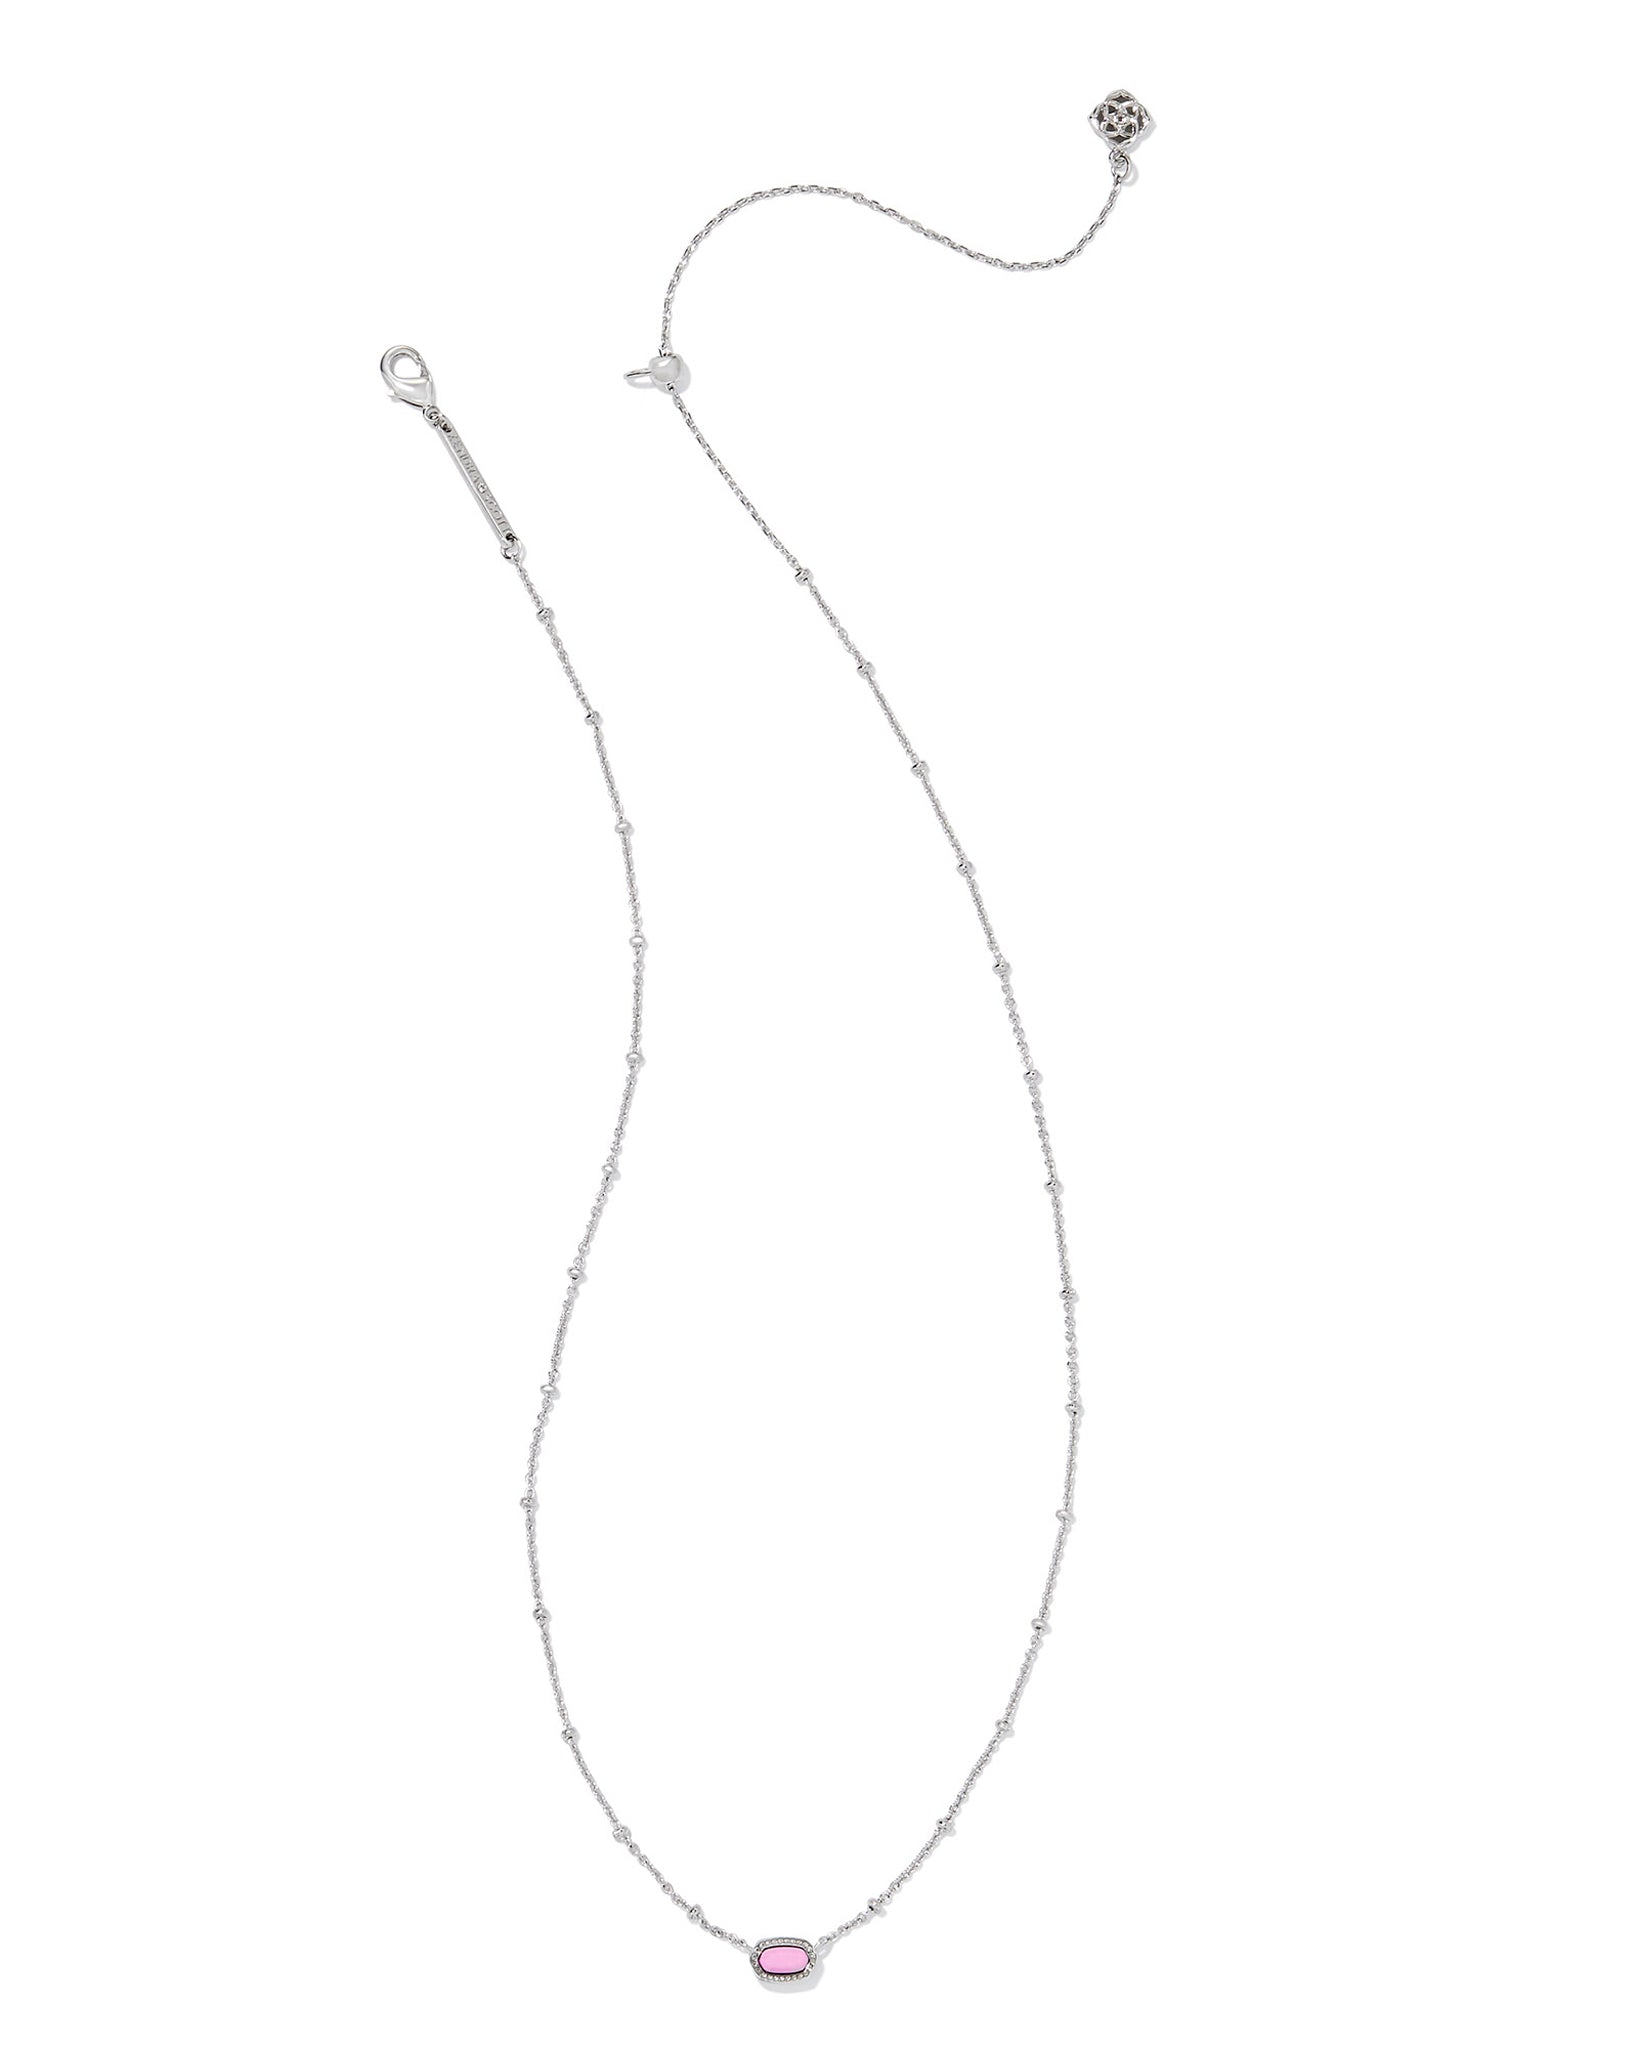 Kendra Scott Mini Elisa Oval Satellite Chain Pendant Necklace in Fuchsia Pink Magnesite and Rhodium